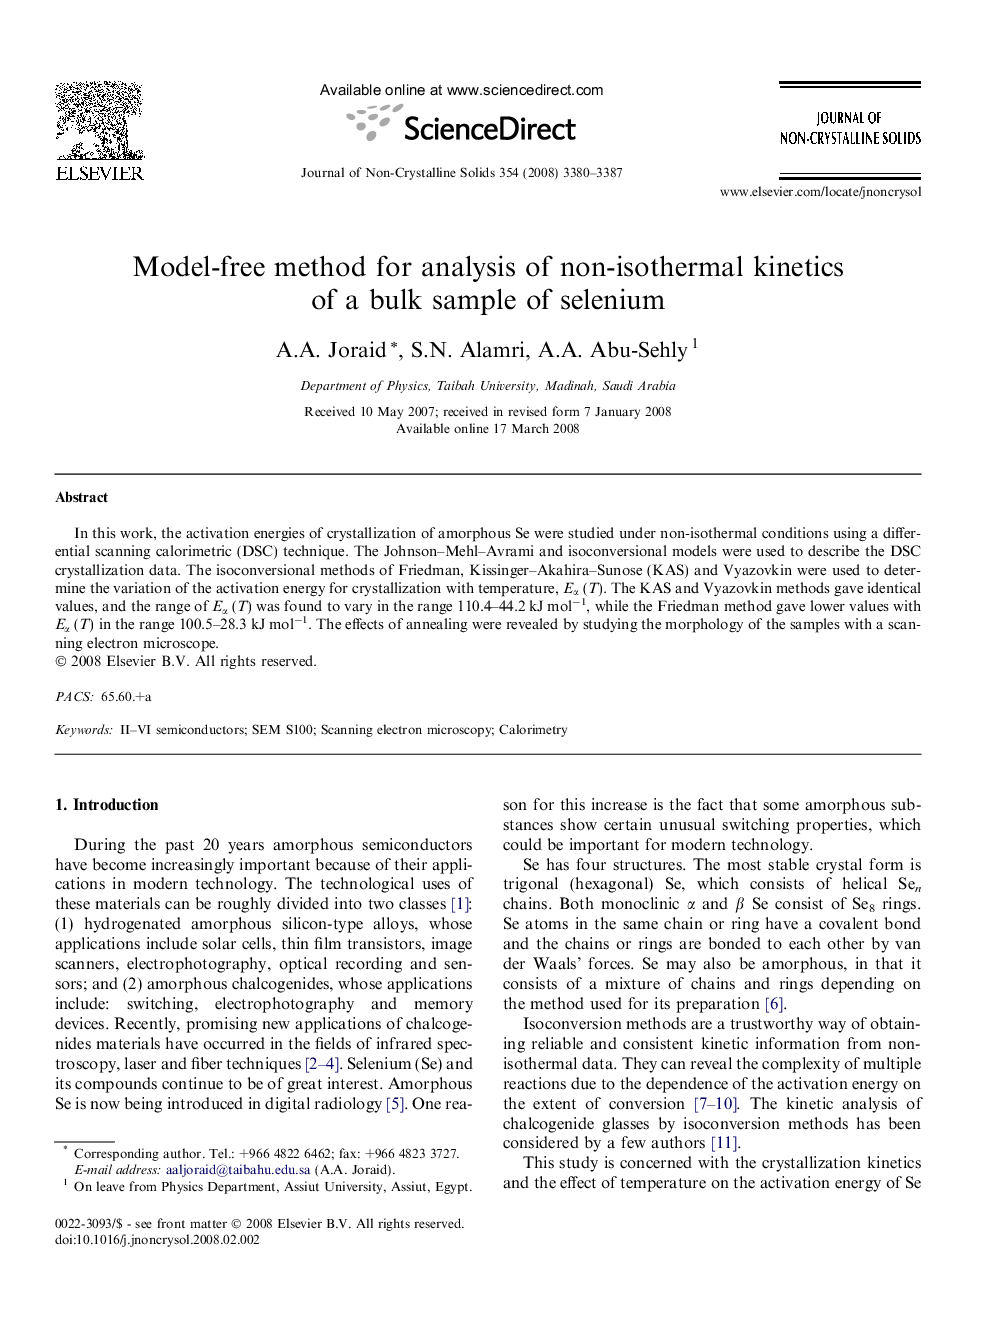 Model-free method for analysis of non-isothermal kinetics of a bulk sample of selenium